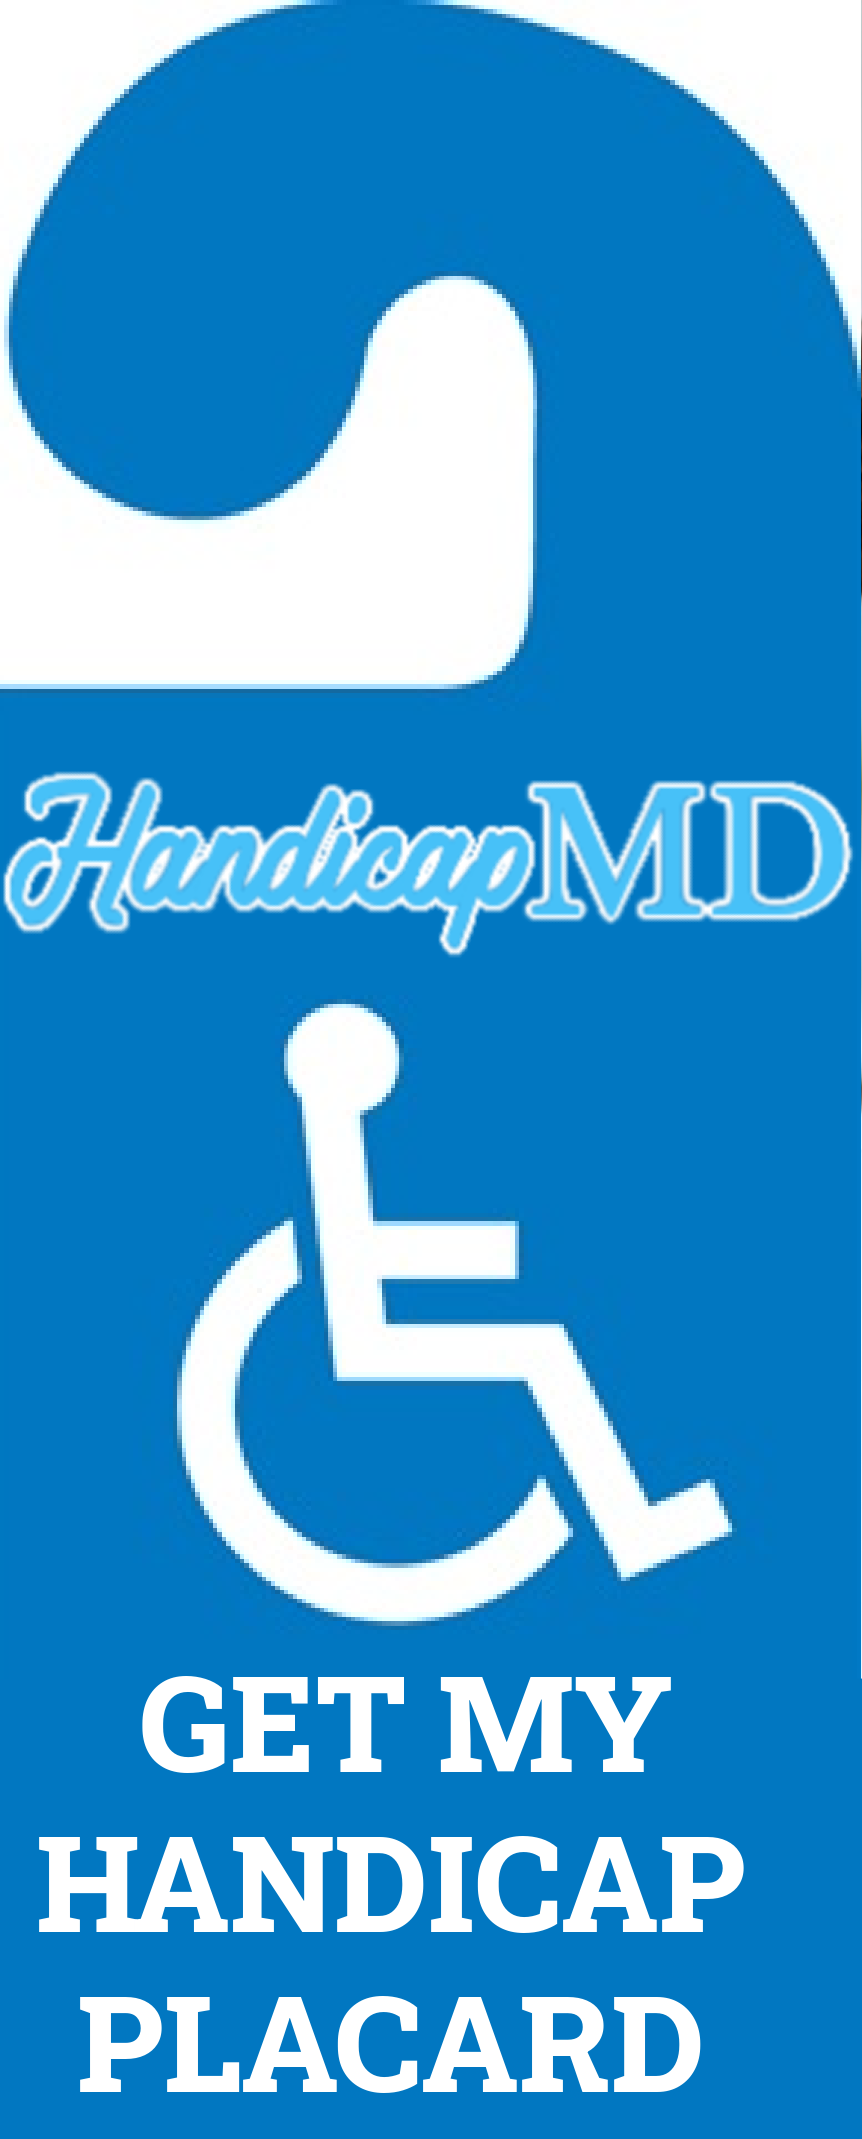 Online Guide to Handicap Parking in Kansas